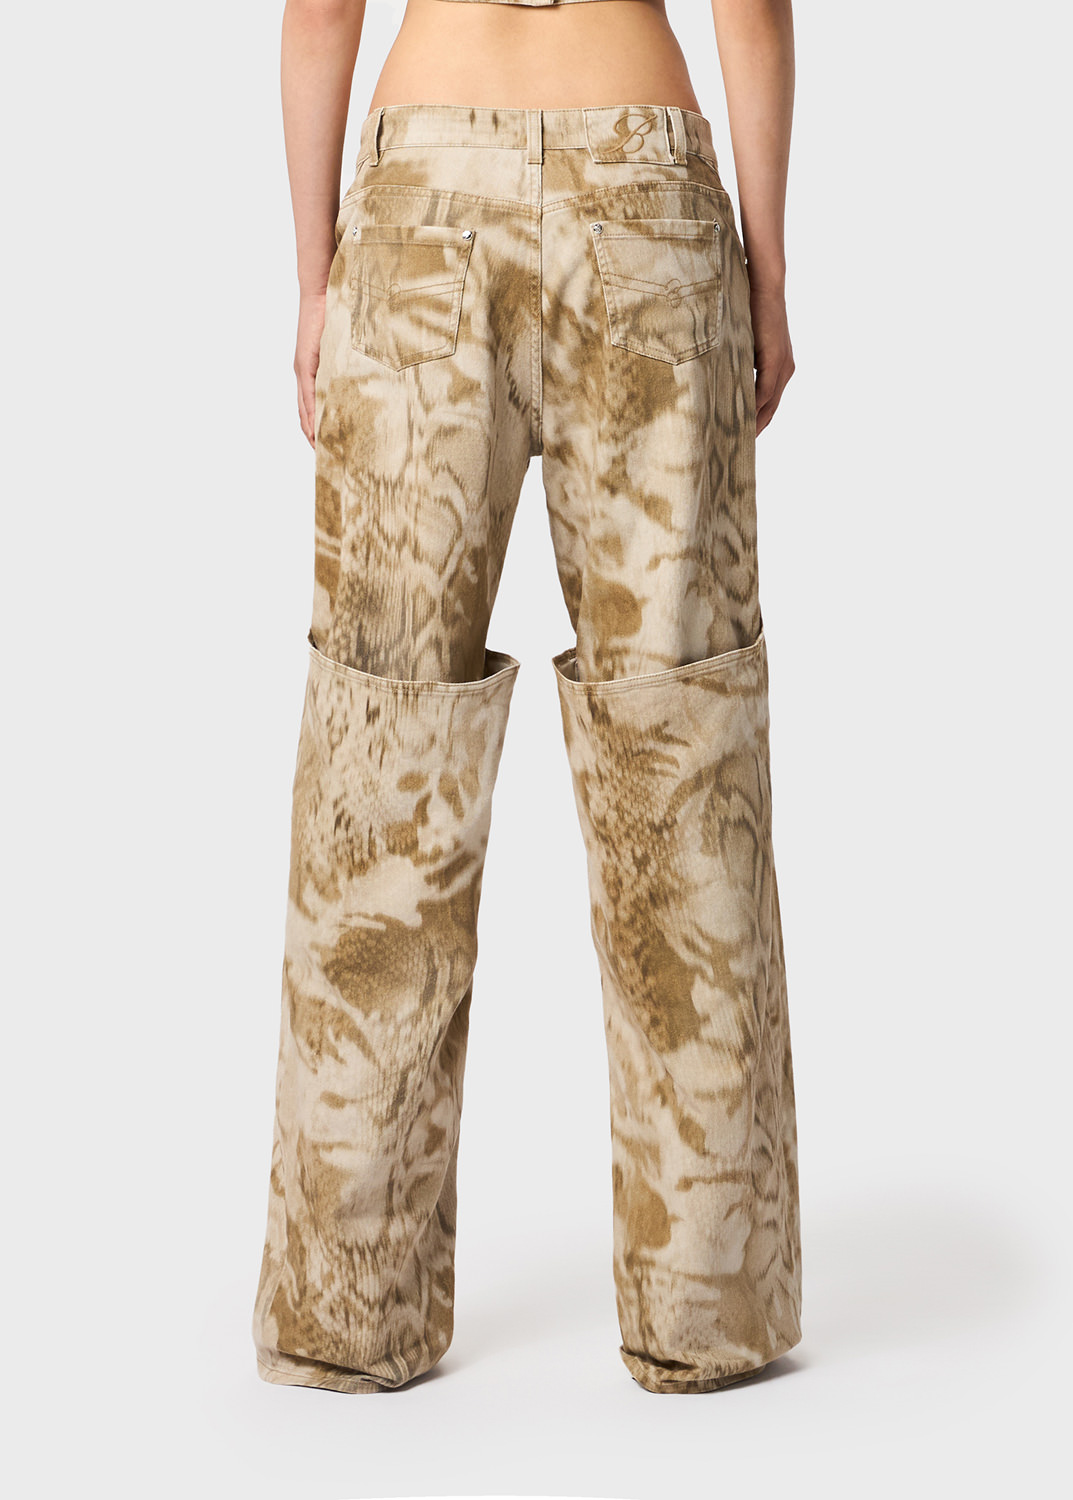 Blugirl Blumarine Size 38 (Aus 8) Silky Light Brown Pants, NWOT, Designer  Label